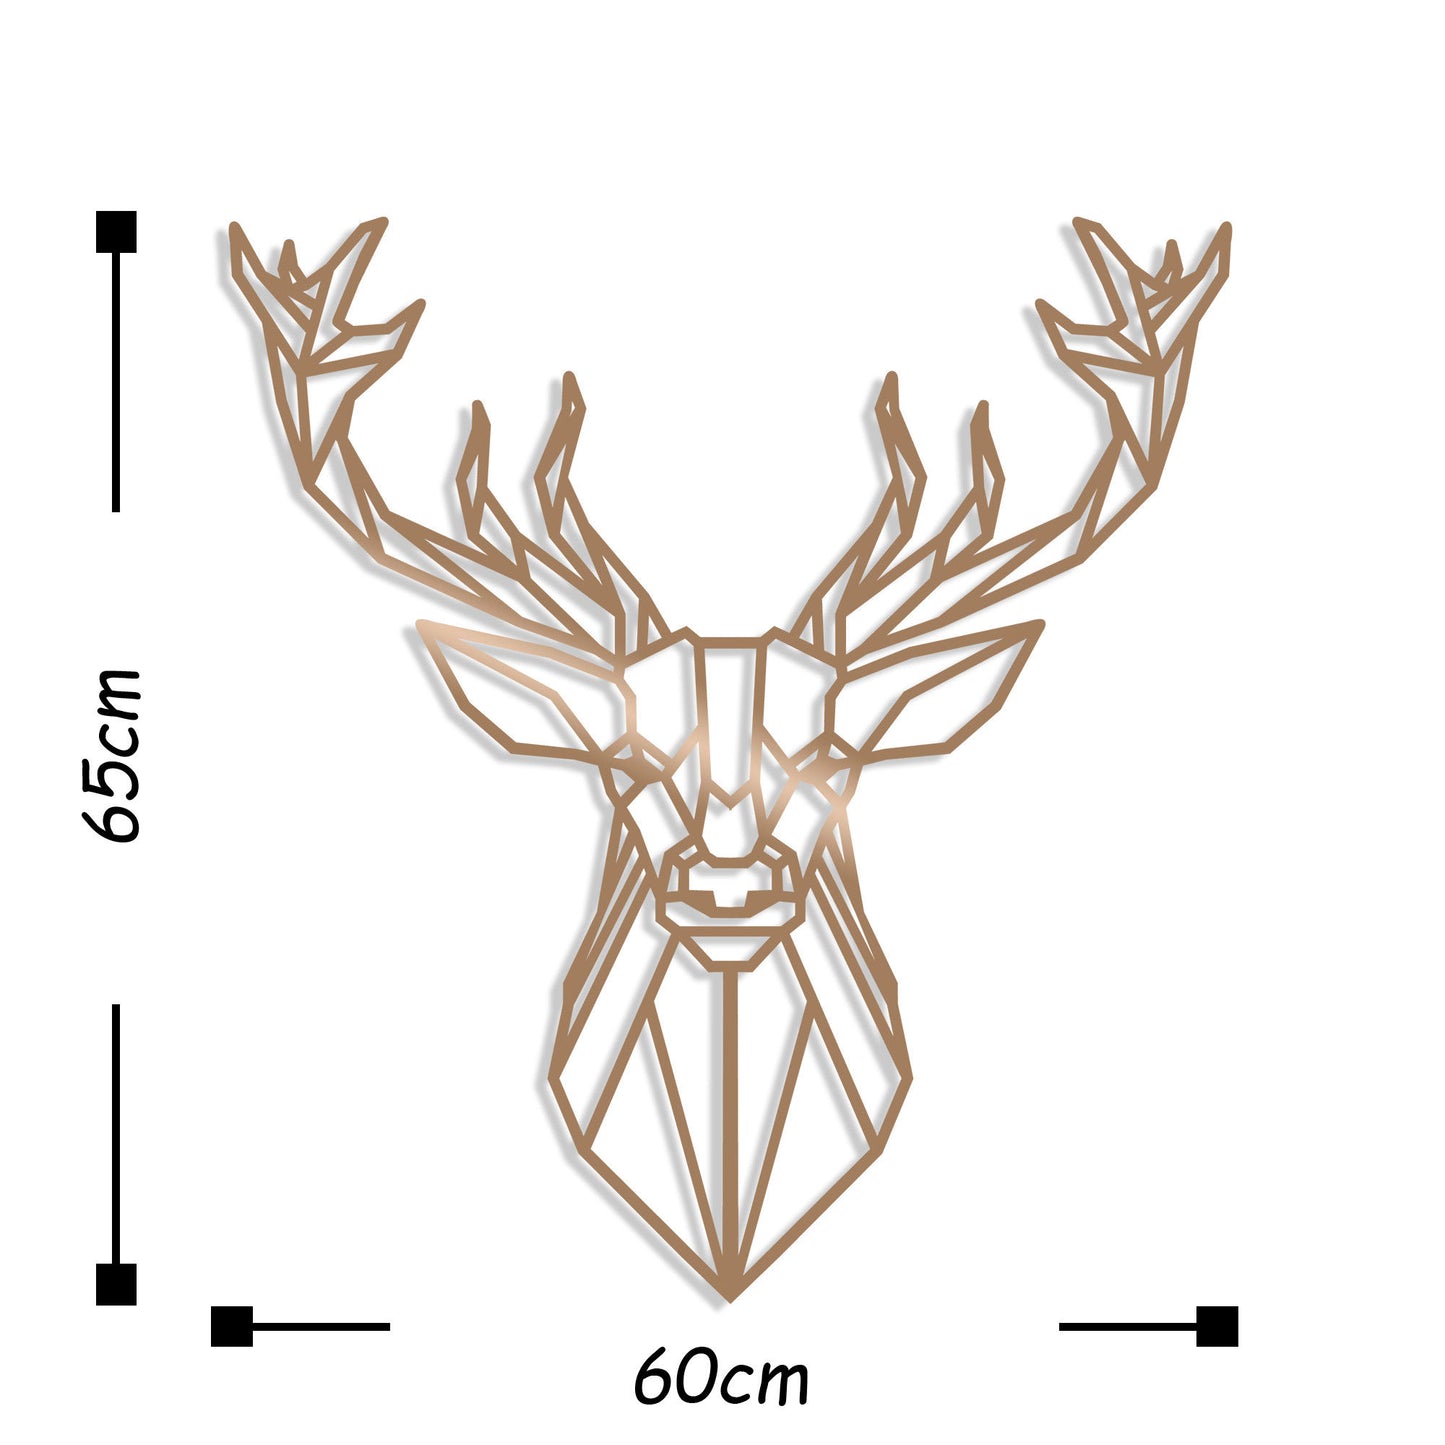 Deer4 - Copper - Decorative Metal Wall Accessory